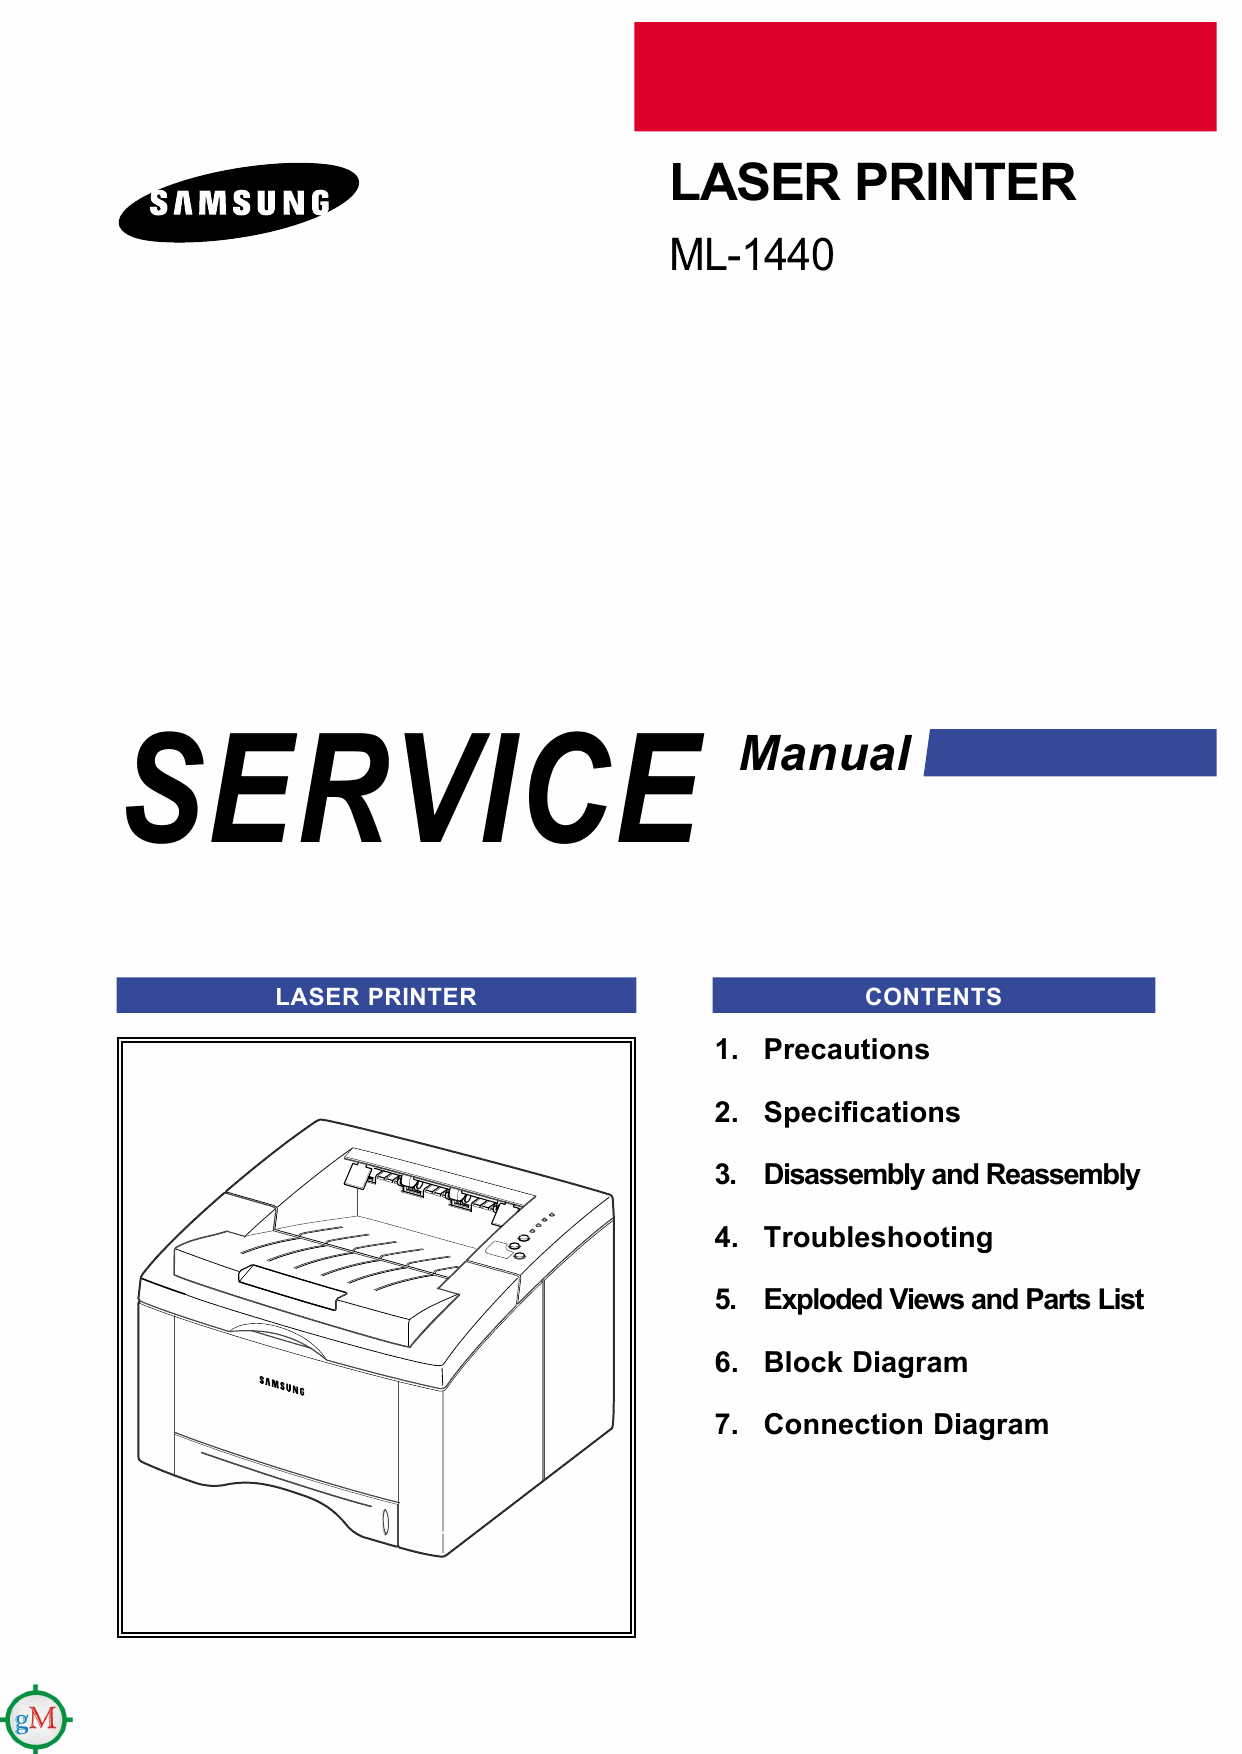 Samsung Laser-Printer ML-1440 Parts and Service Manual-1